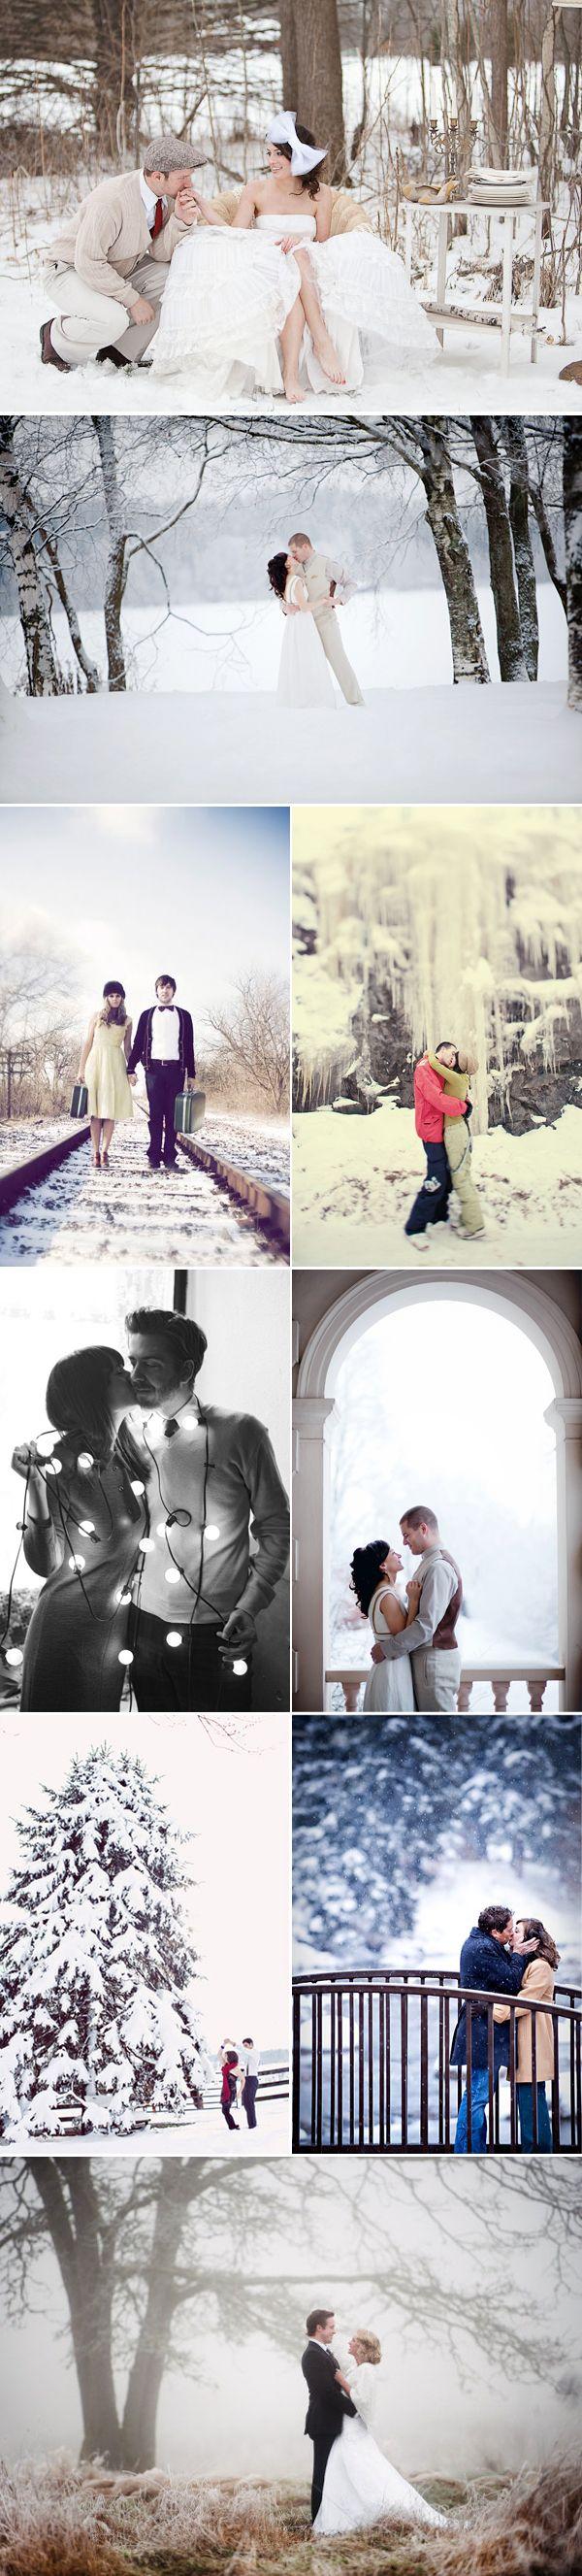 Wedding - Winter Engagement Photos 